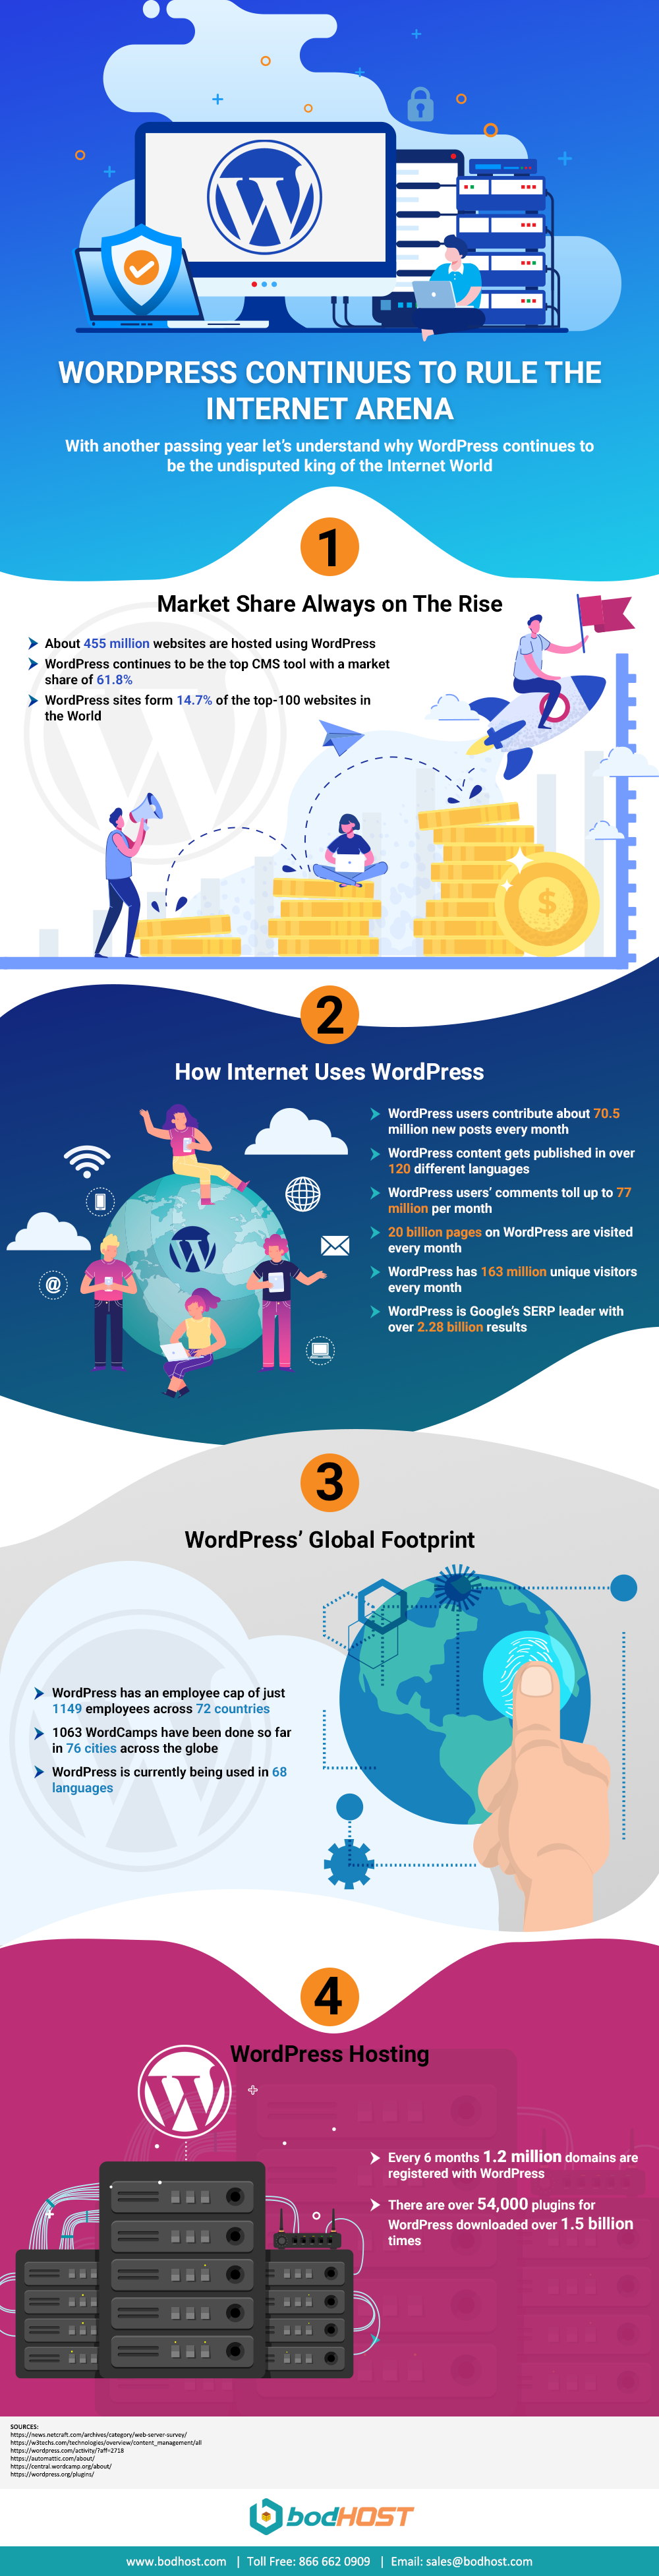 WordPress Hosting Facts